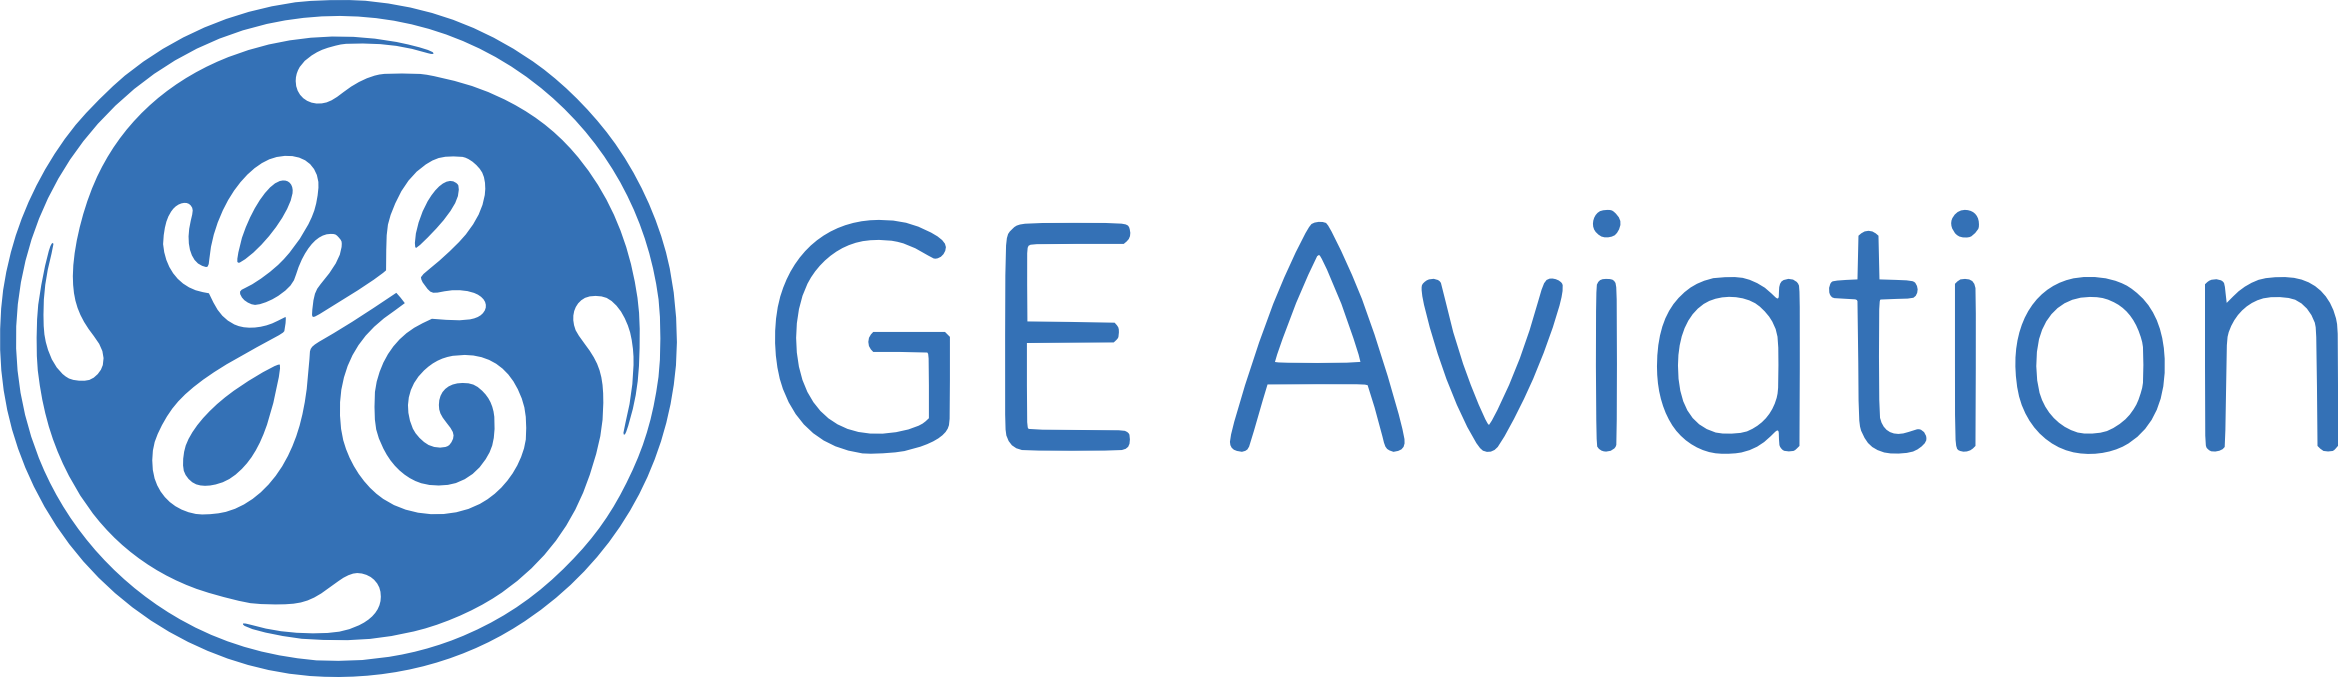 ge-aviation-png-logo-2